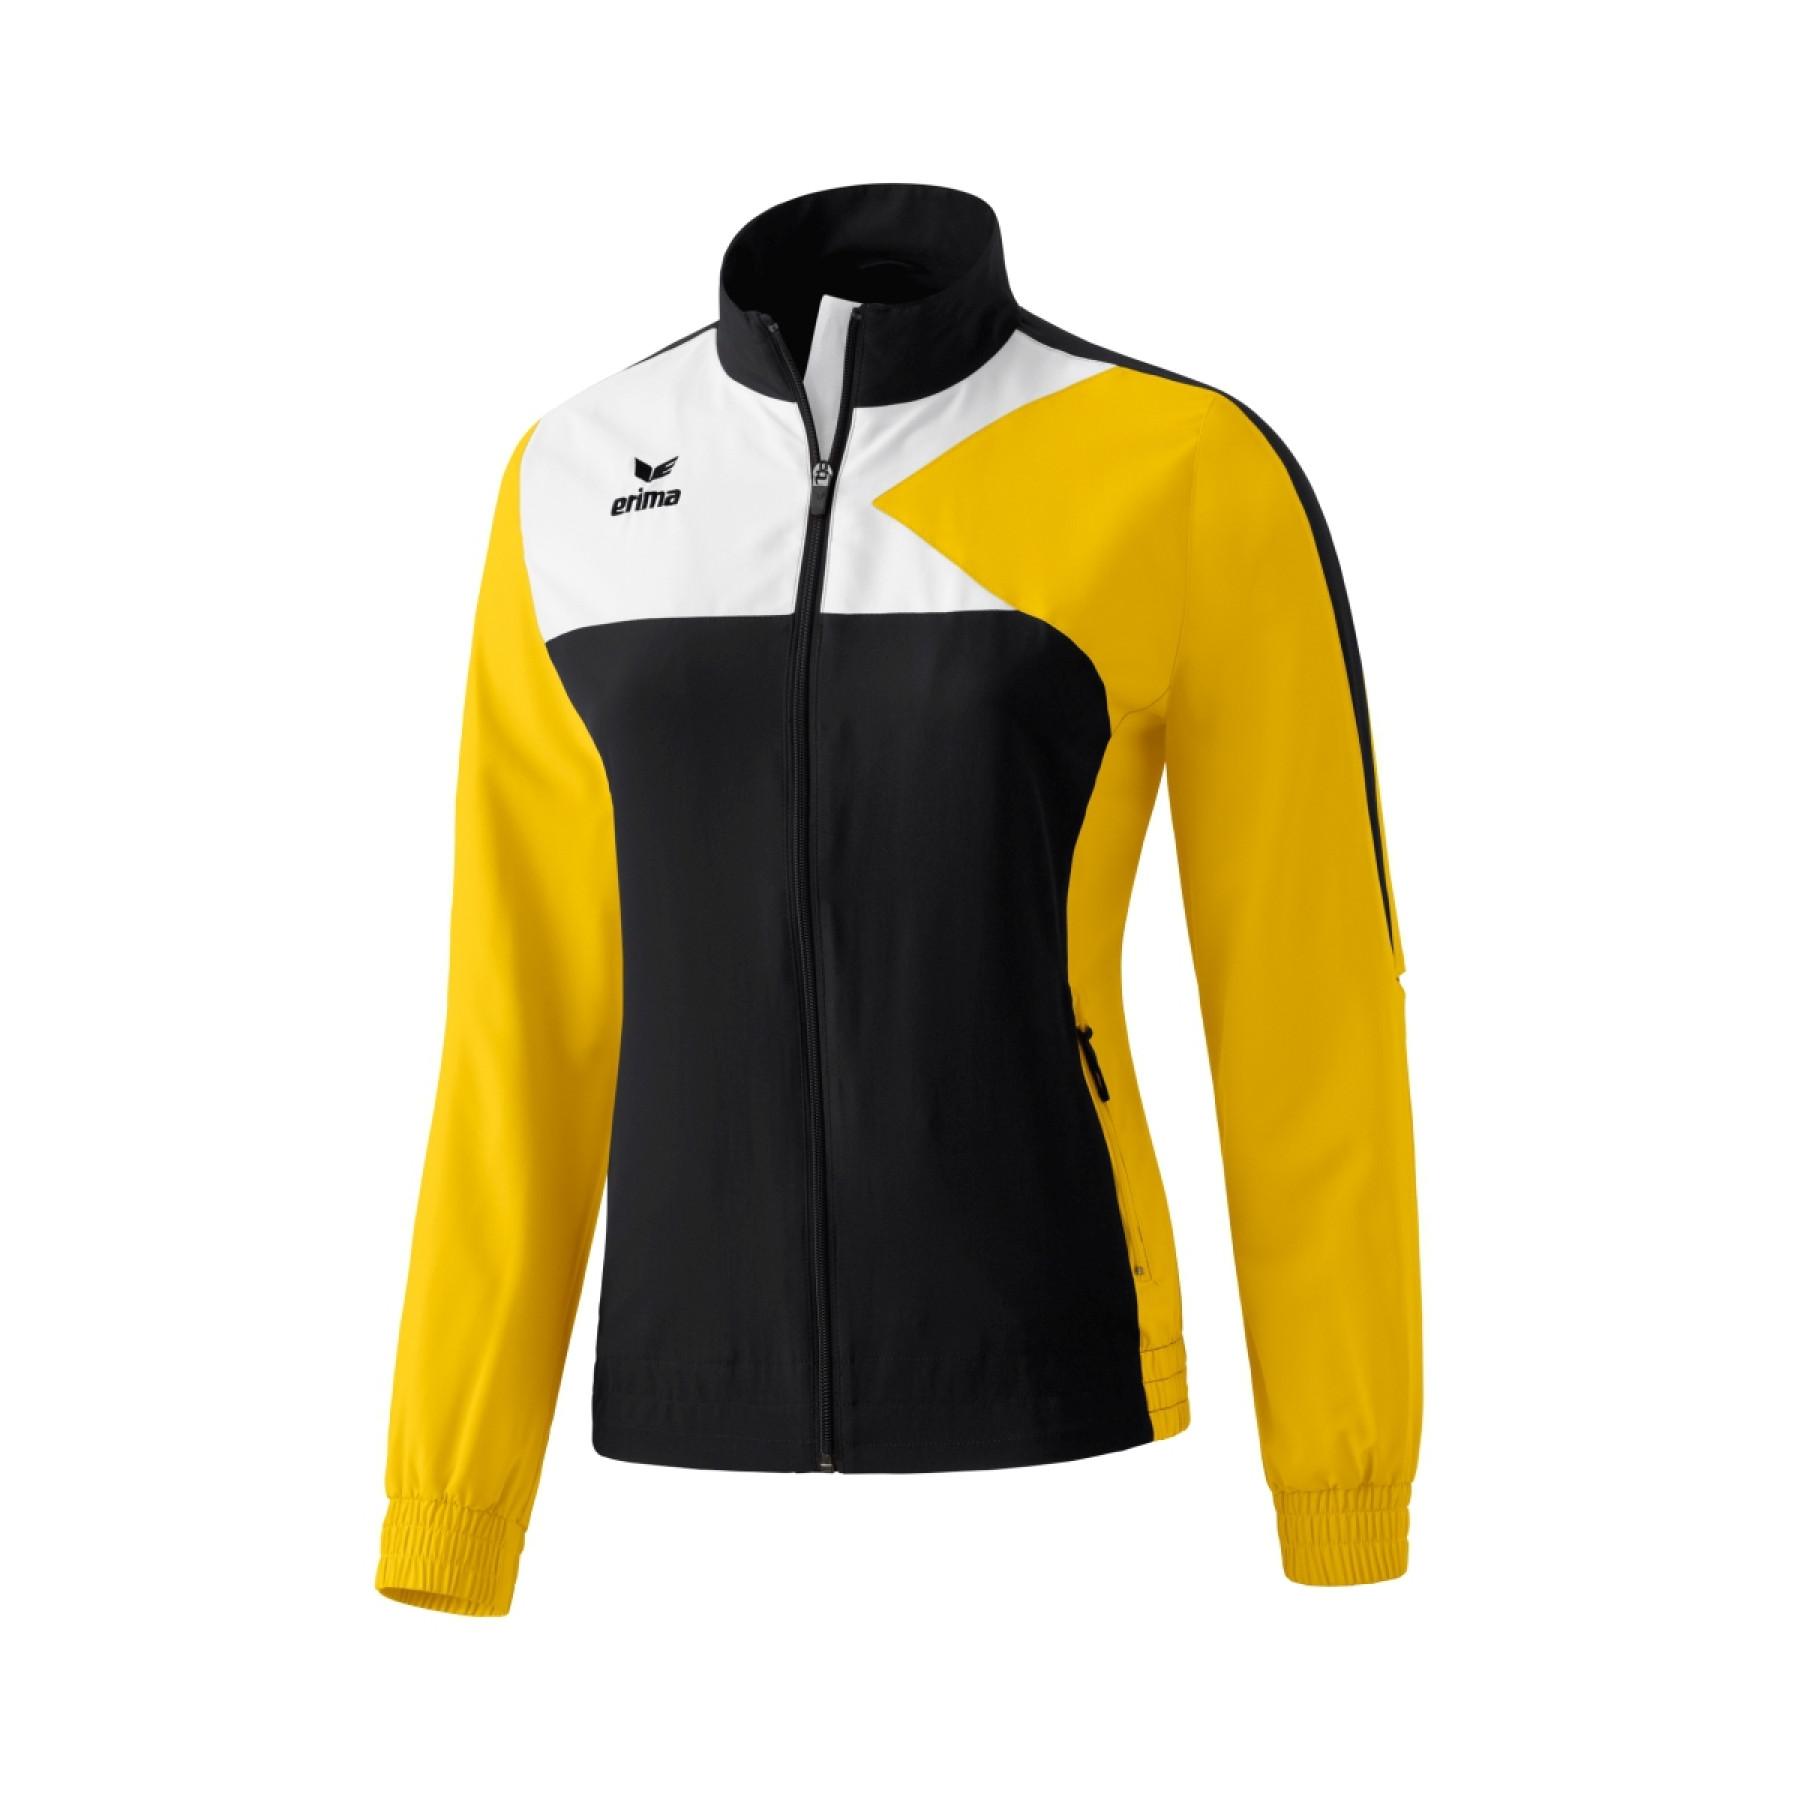 Women's Track jacket Erima Premium One